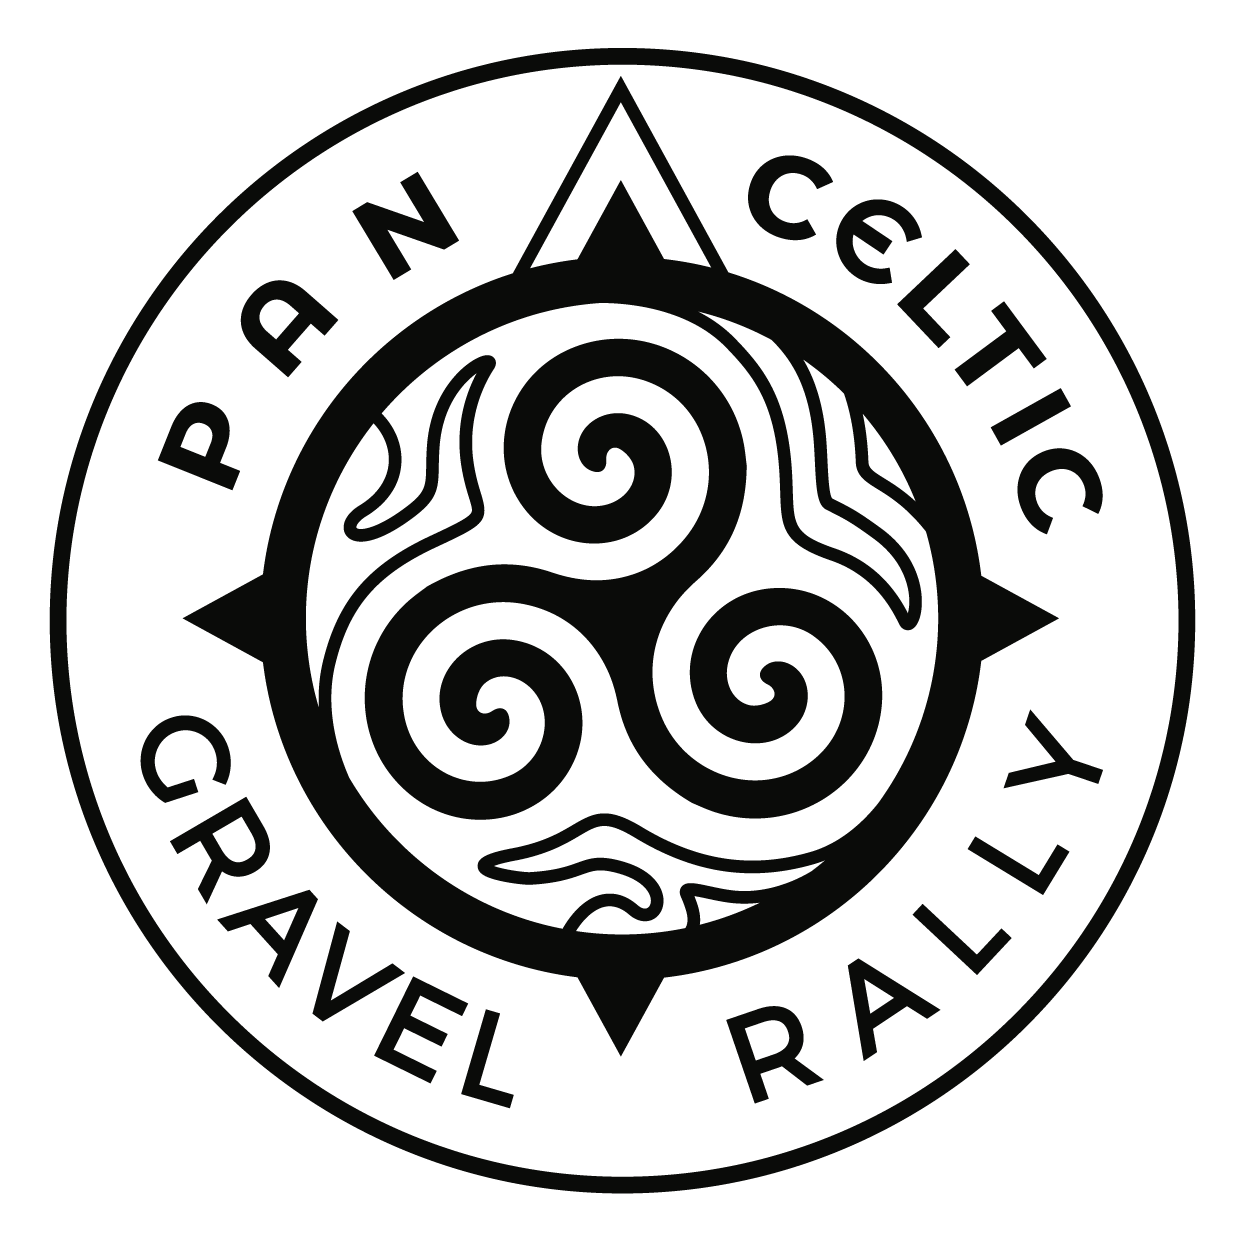 Pan Celtic Gravel Rally